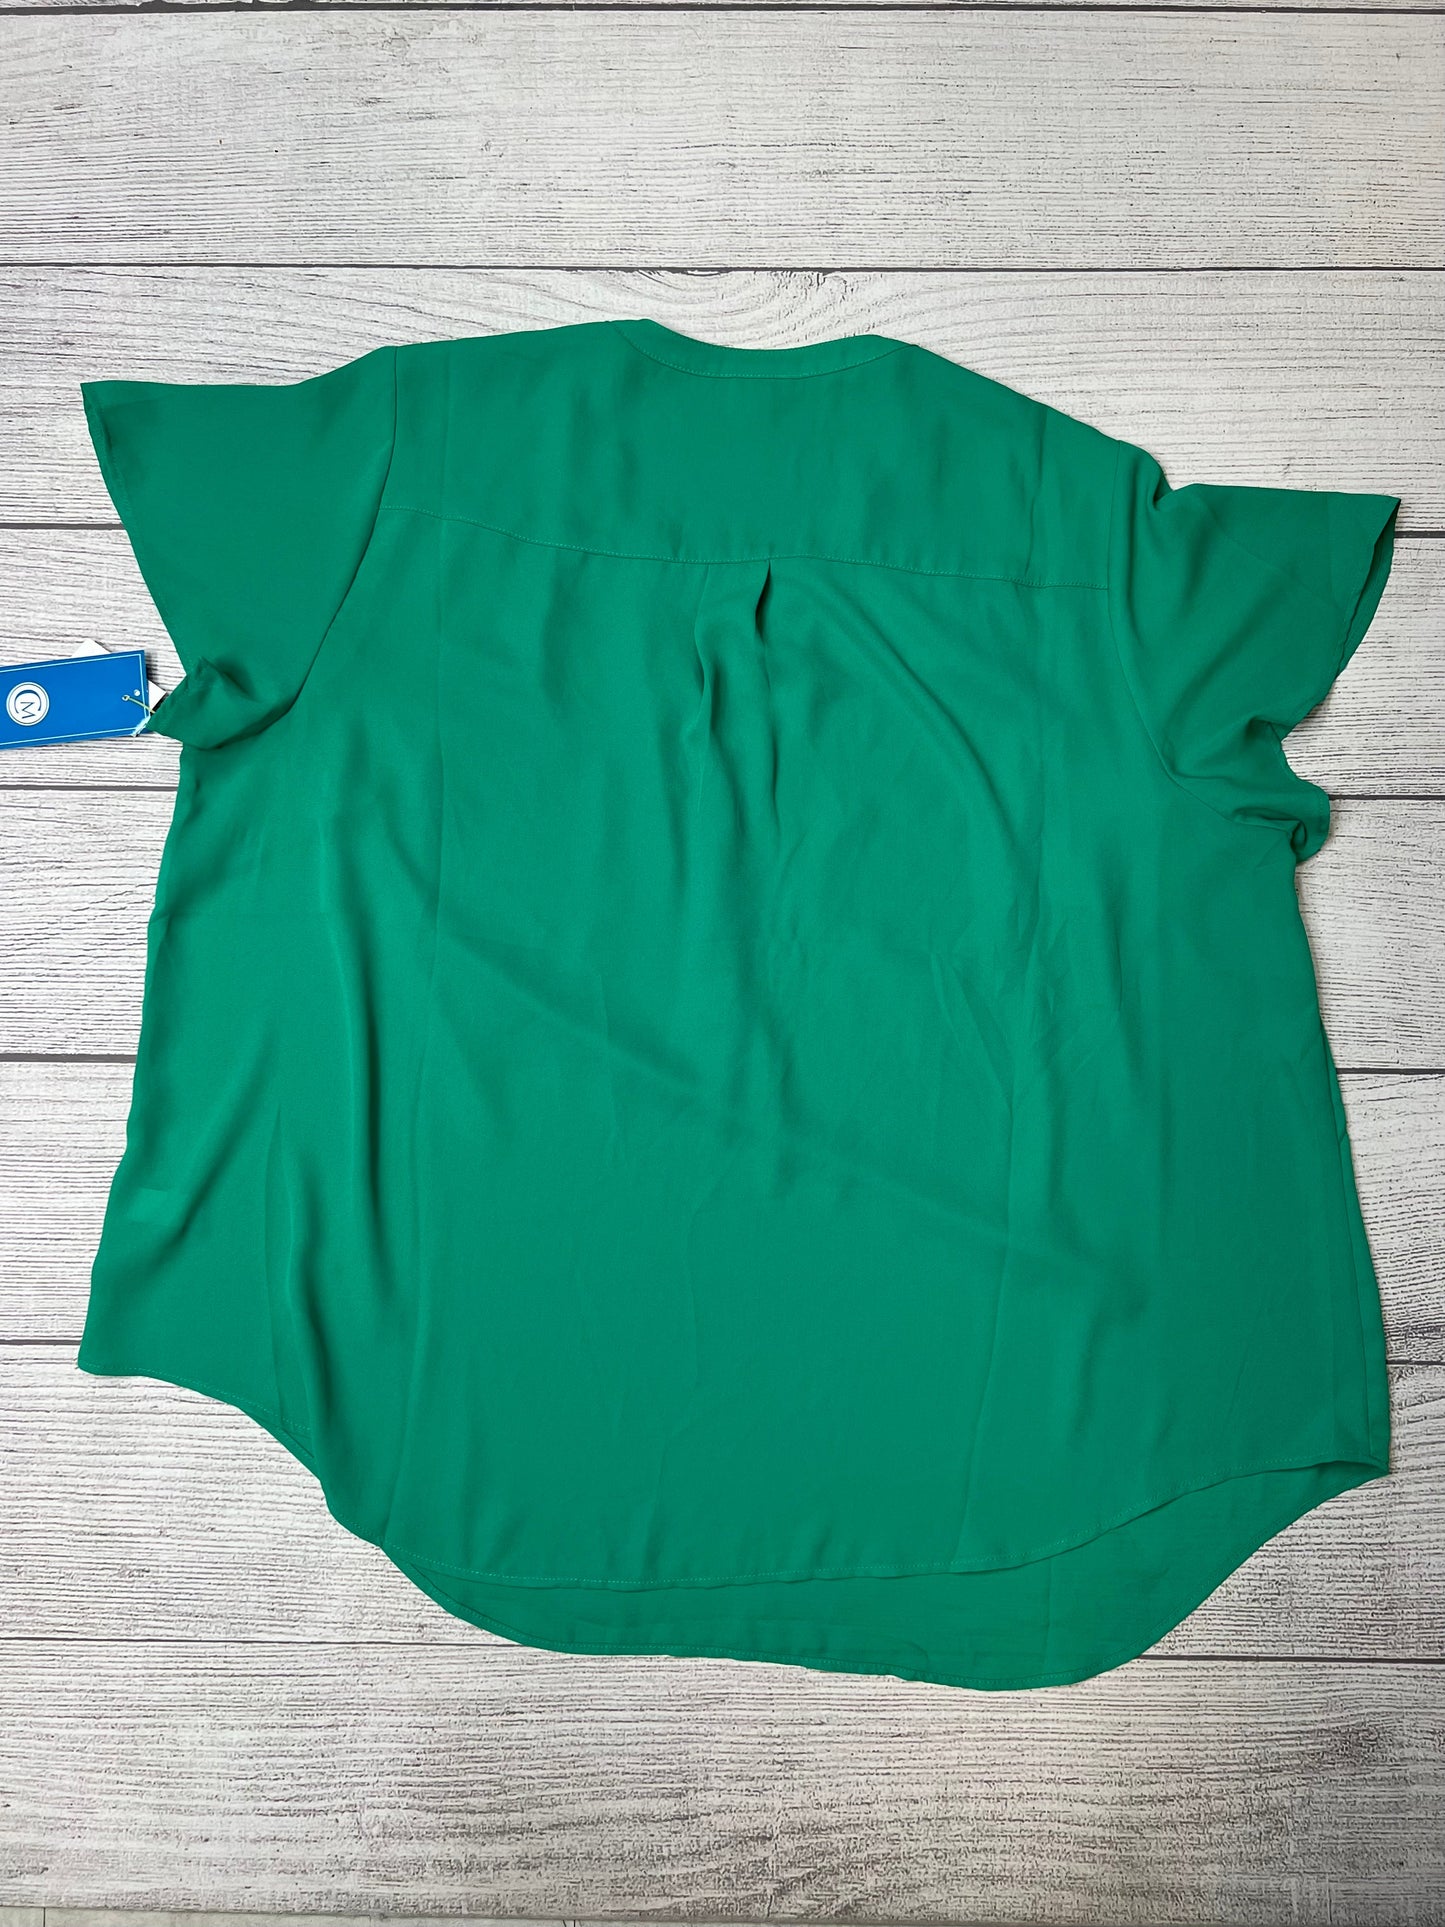 Green Top Short Sleeve Torrid, Size 3x